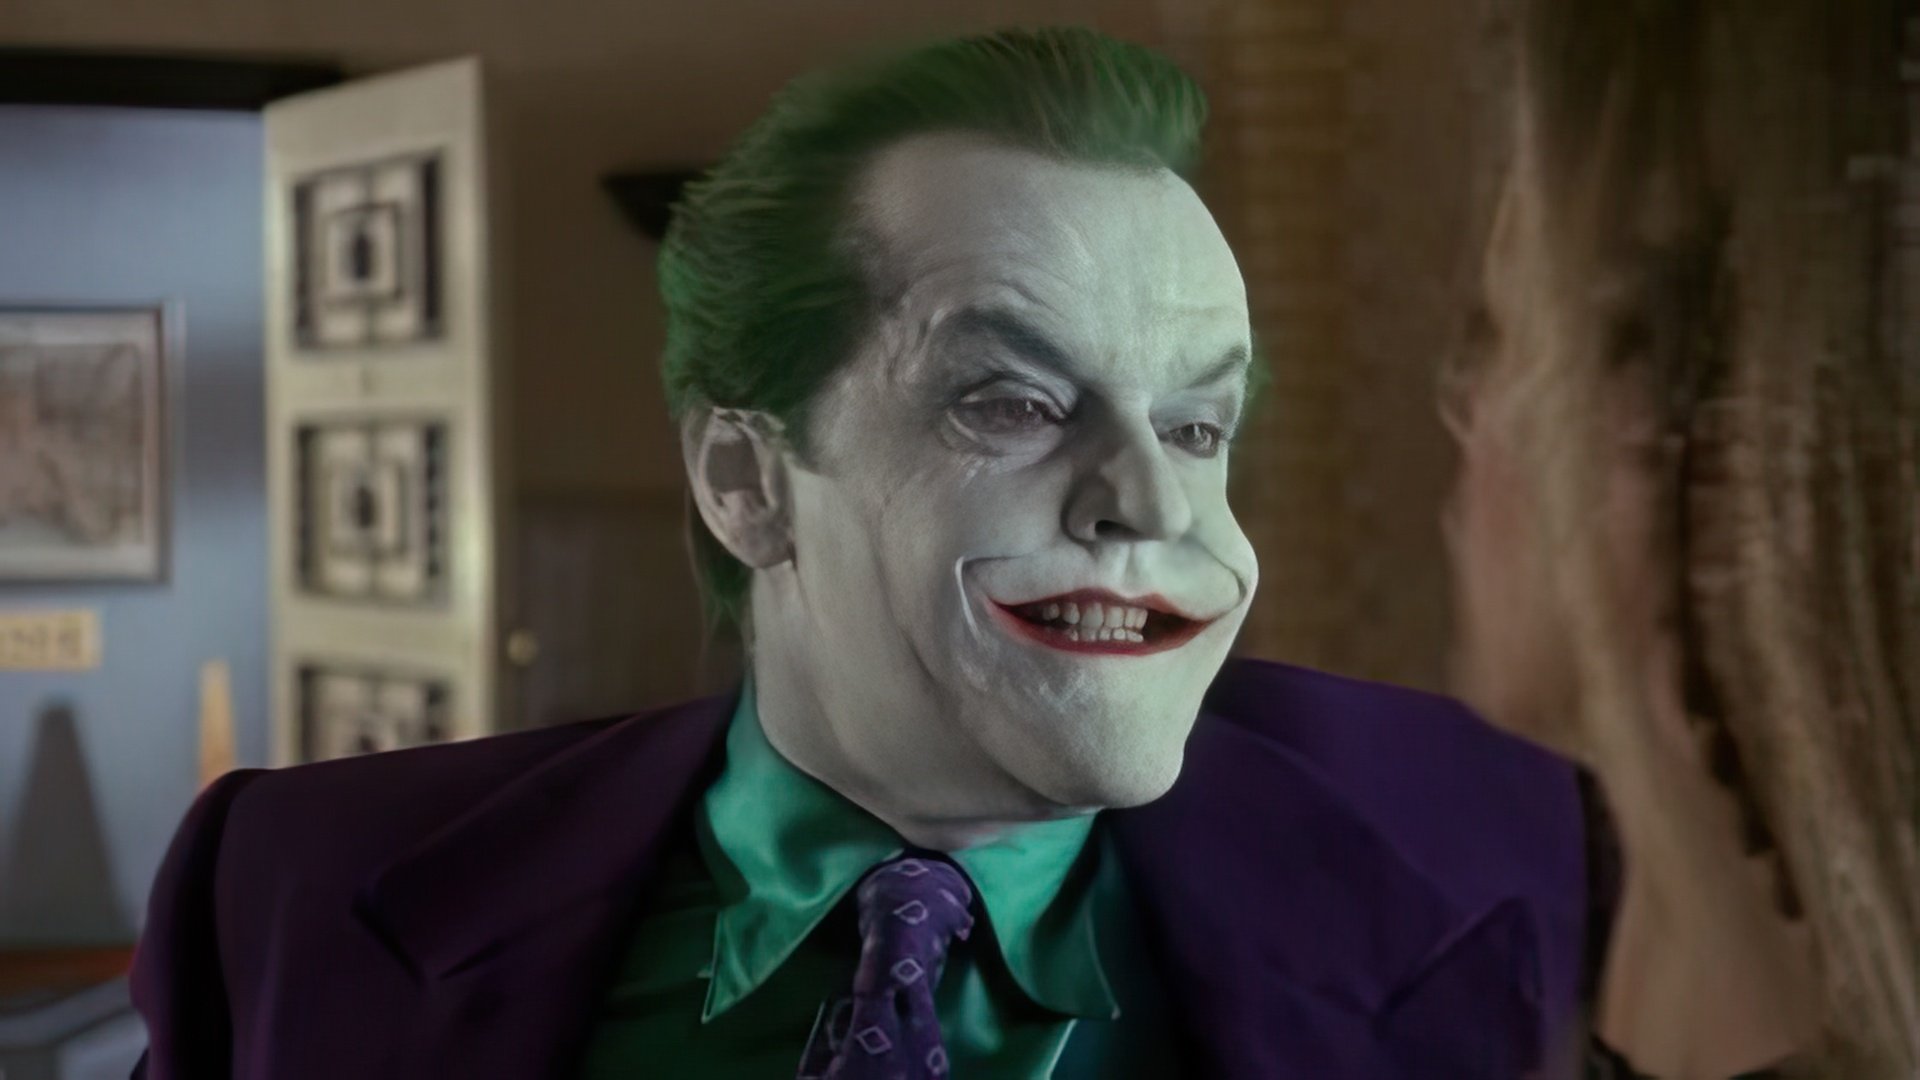 One of Nicholson's best roles: The Joker from 1989's “Batman”